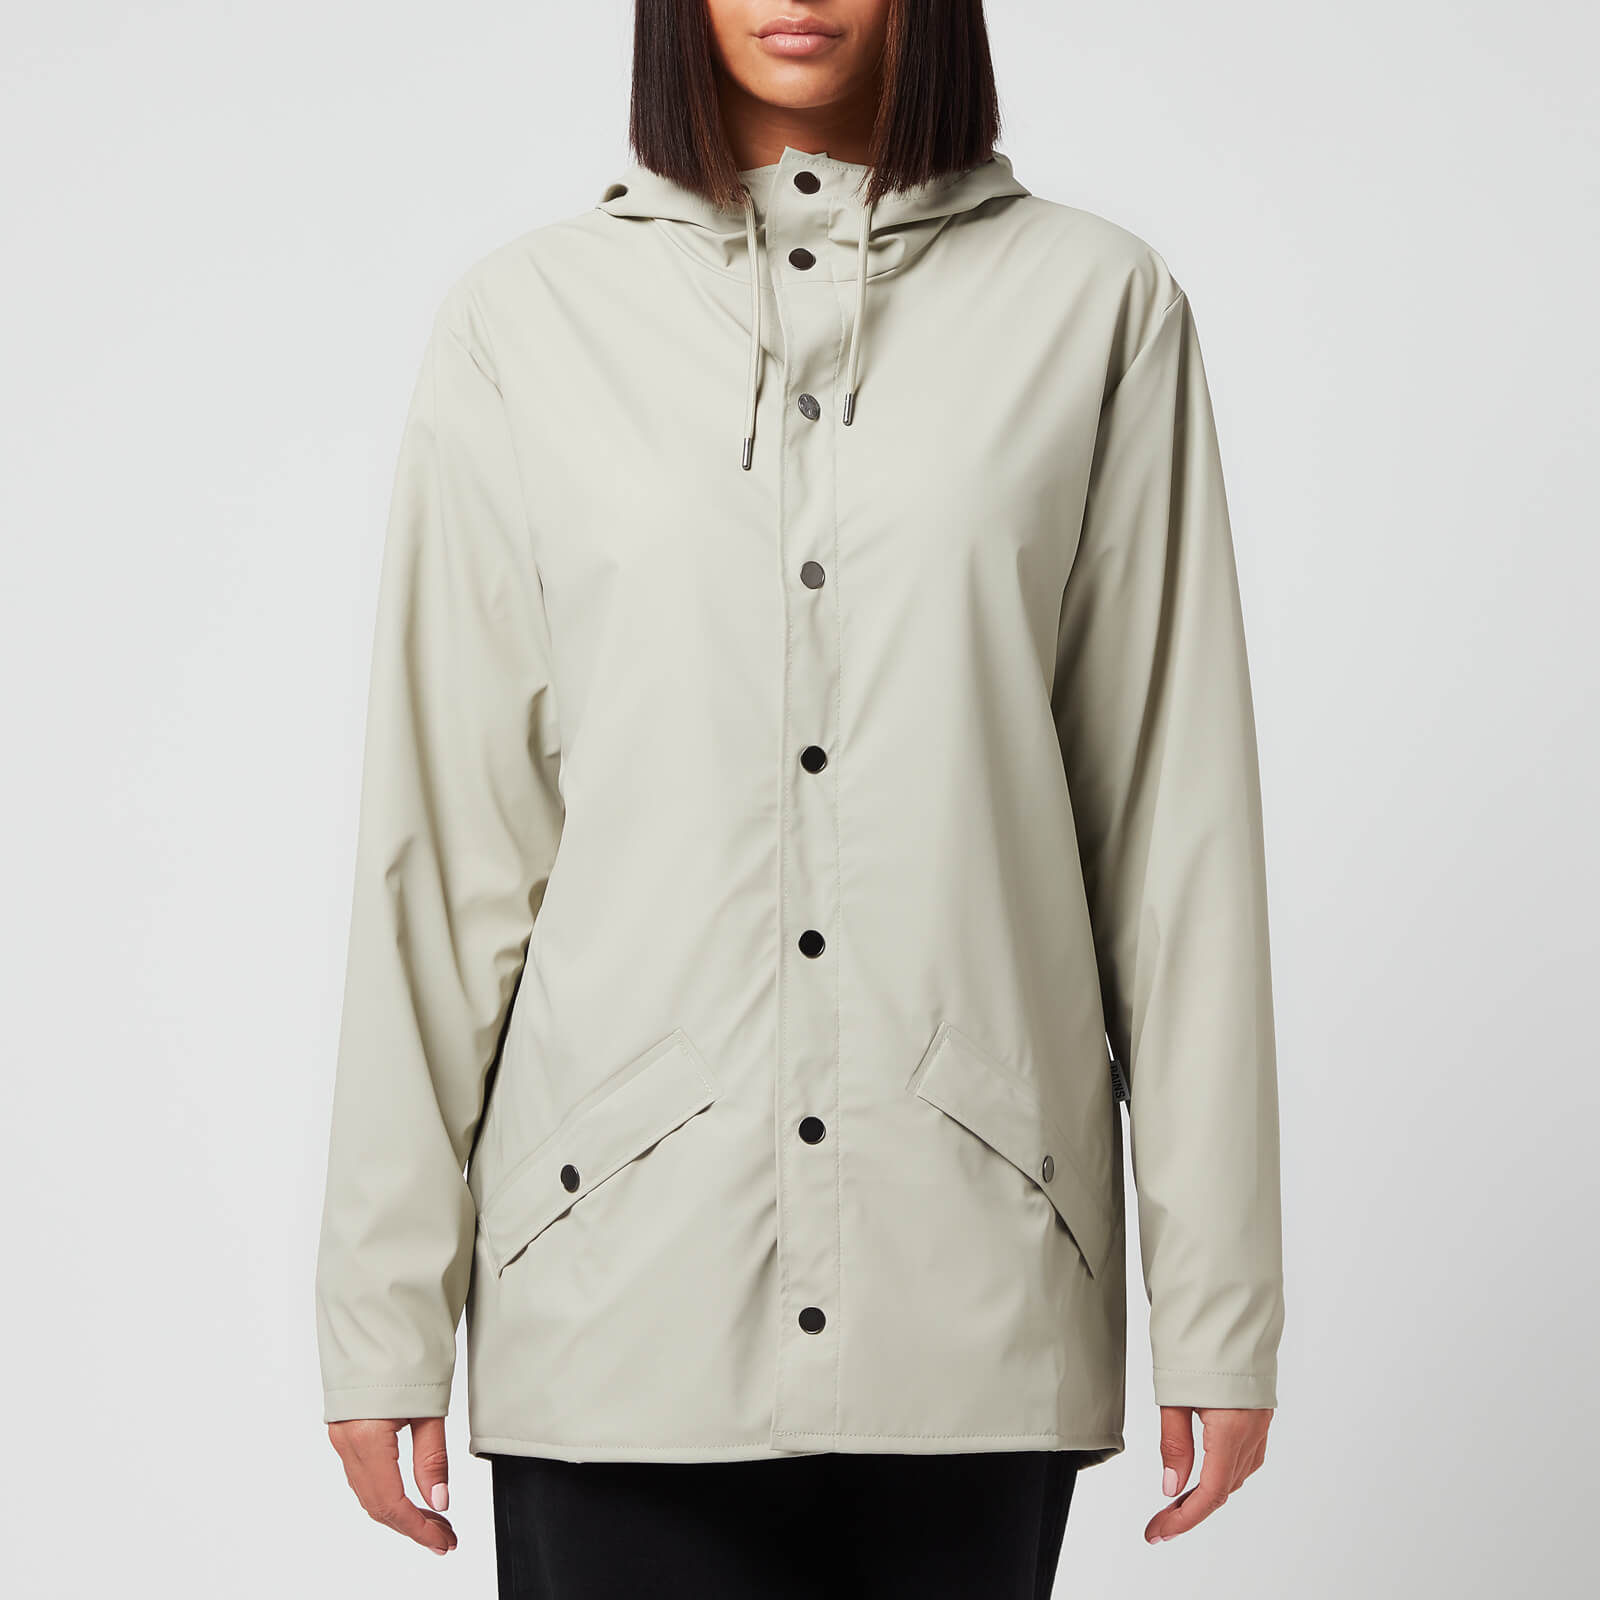 Rains Women's Jacket - Cement - XS